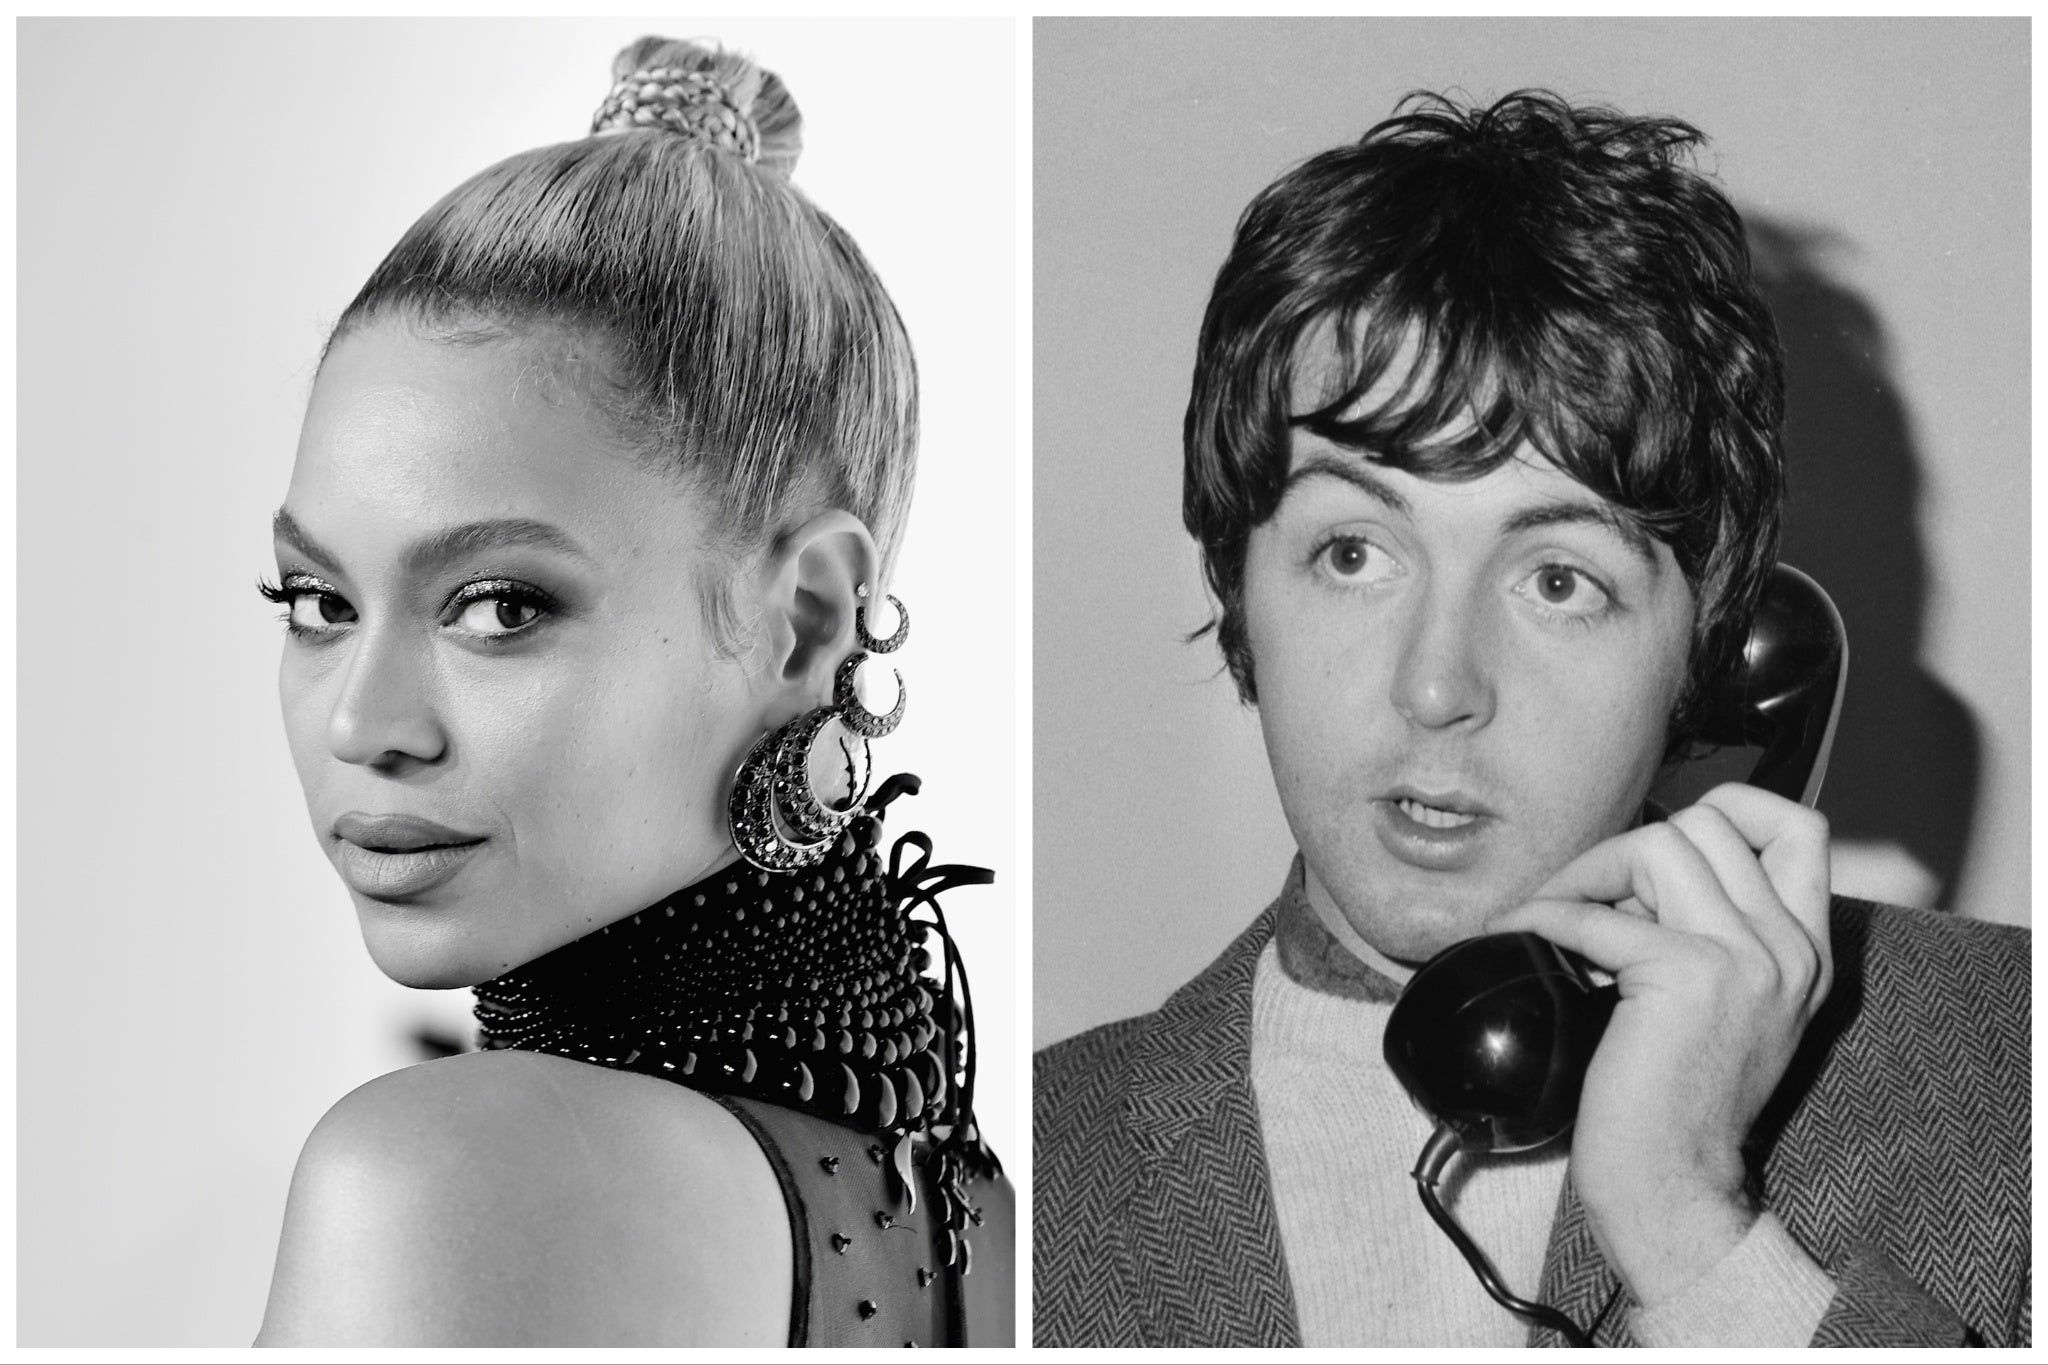 Beyoncé (left) and The Beatles’ Paul McCartney